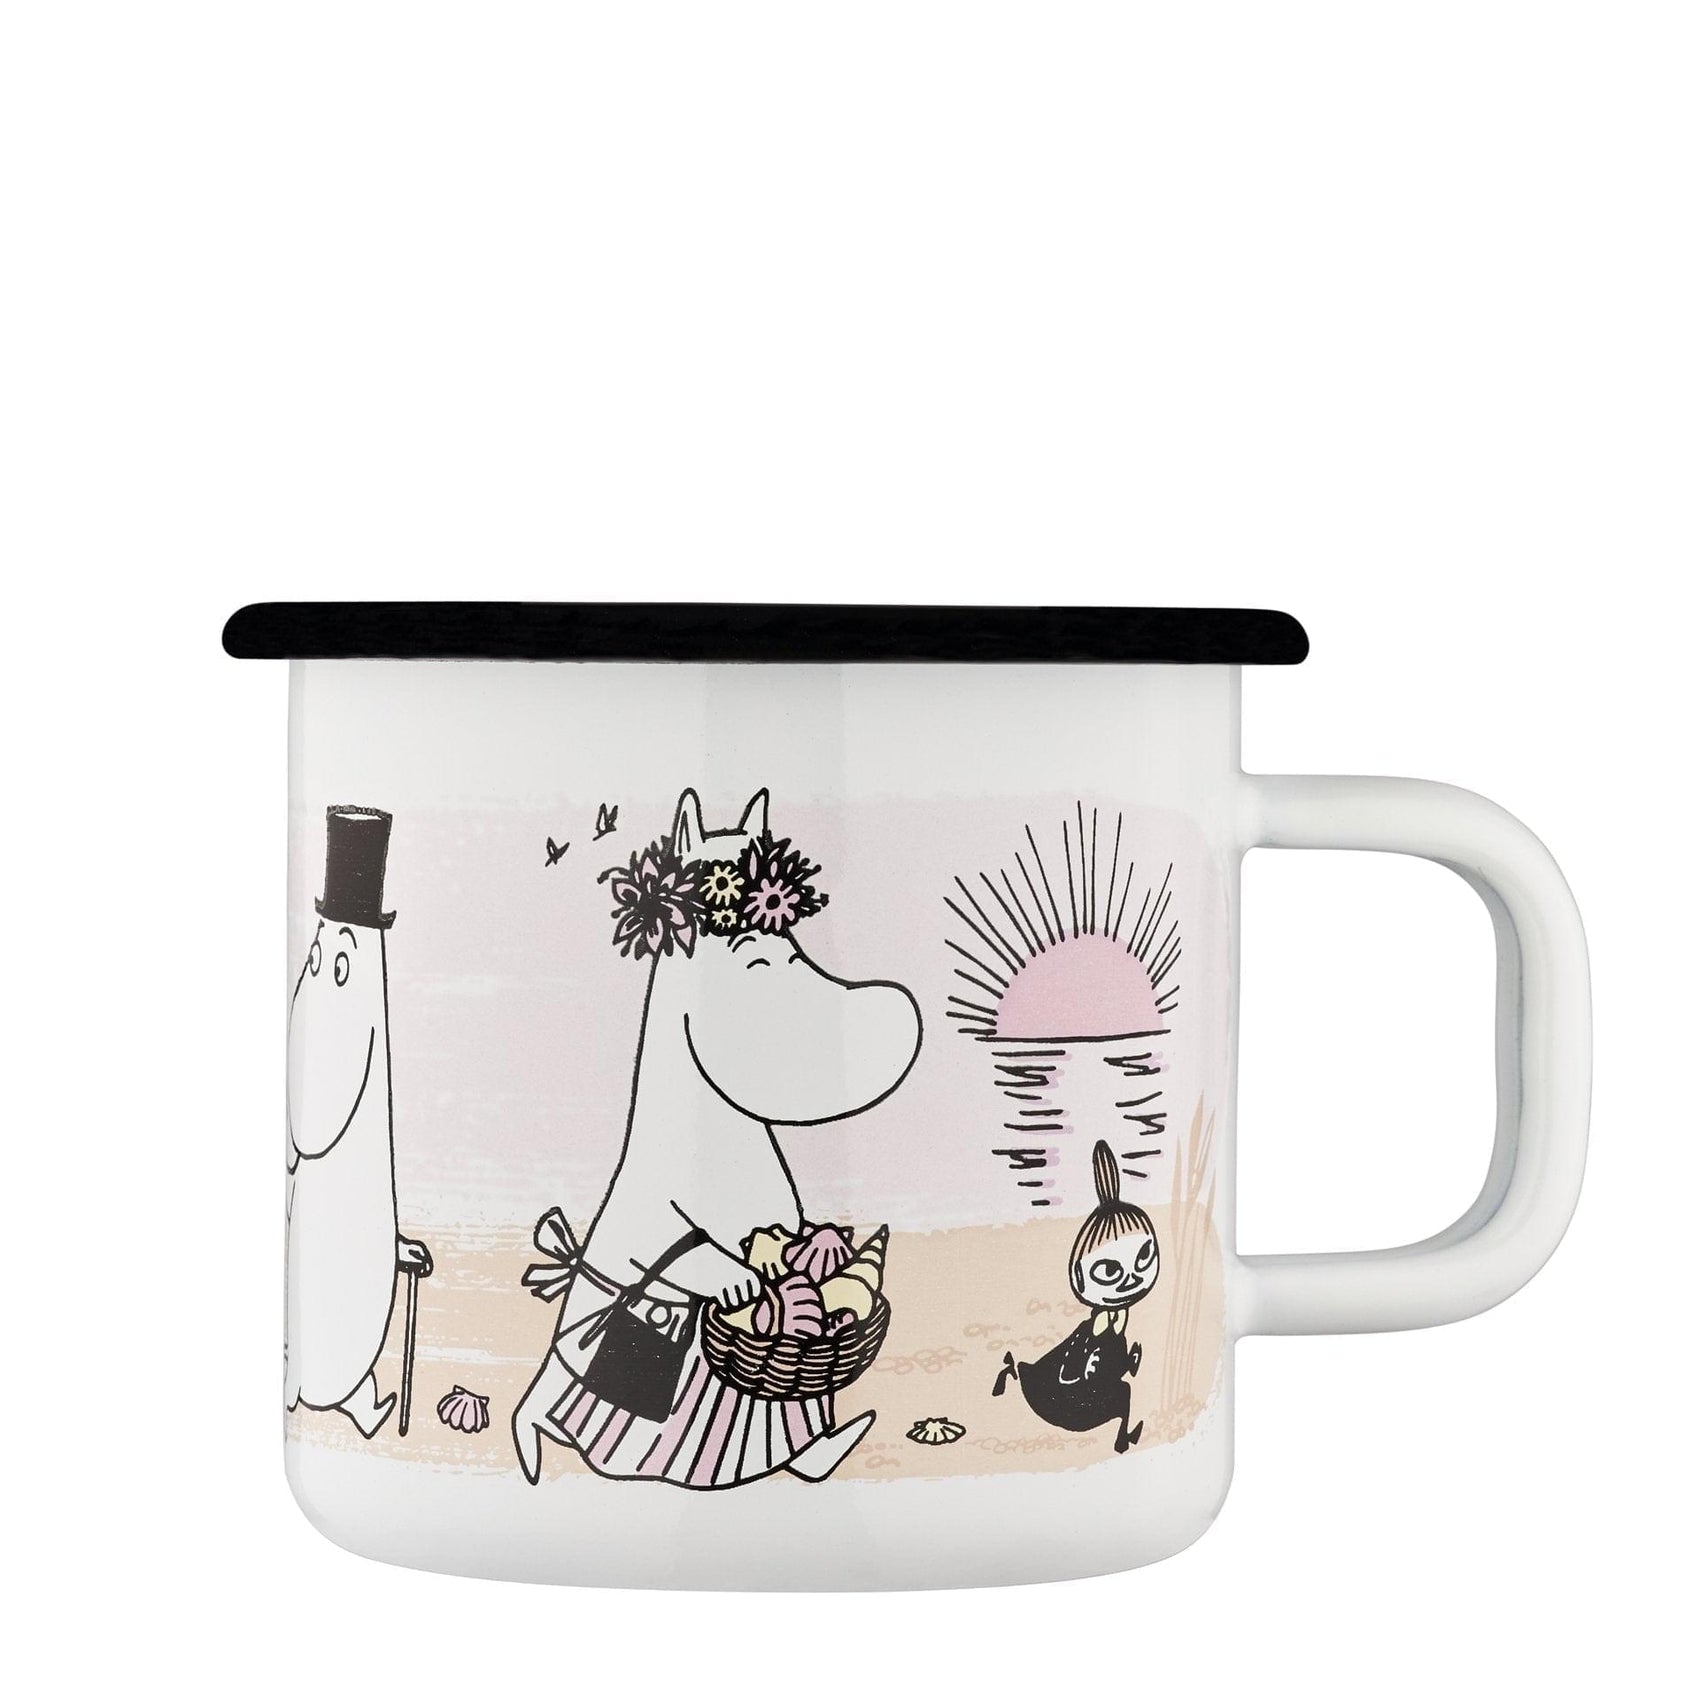 The Moomins enamel mug 3.7dl Stranden